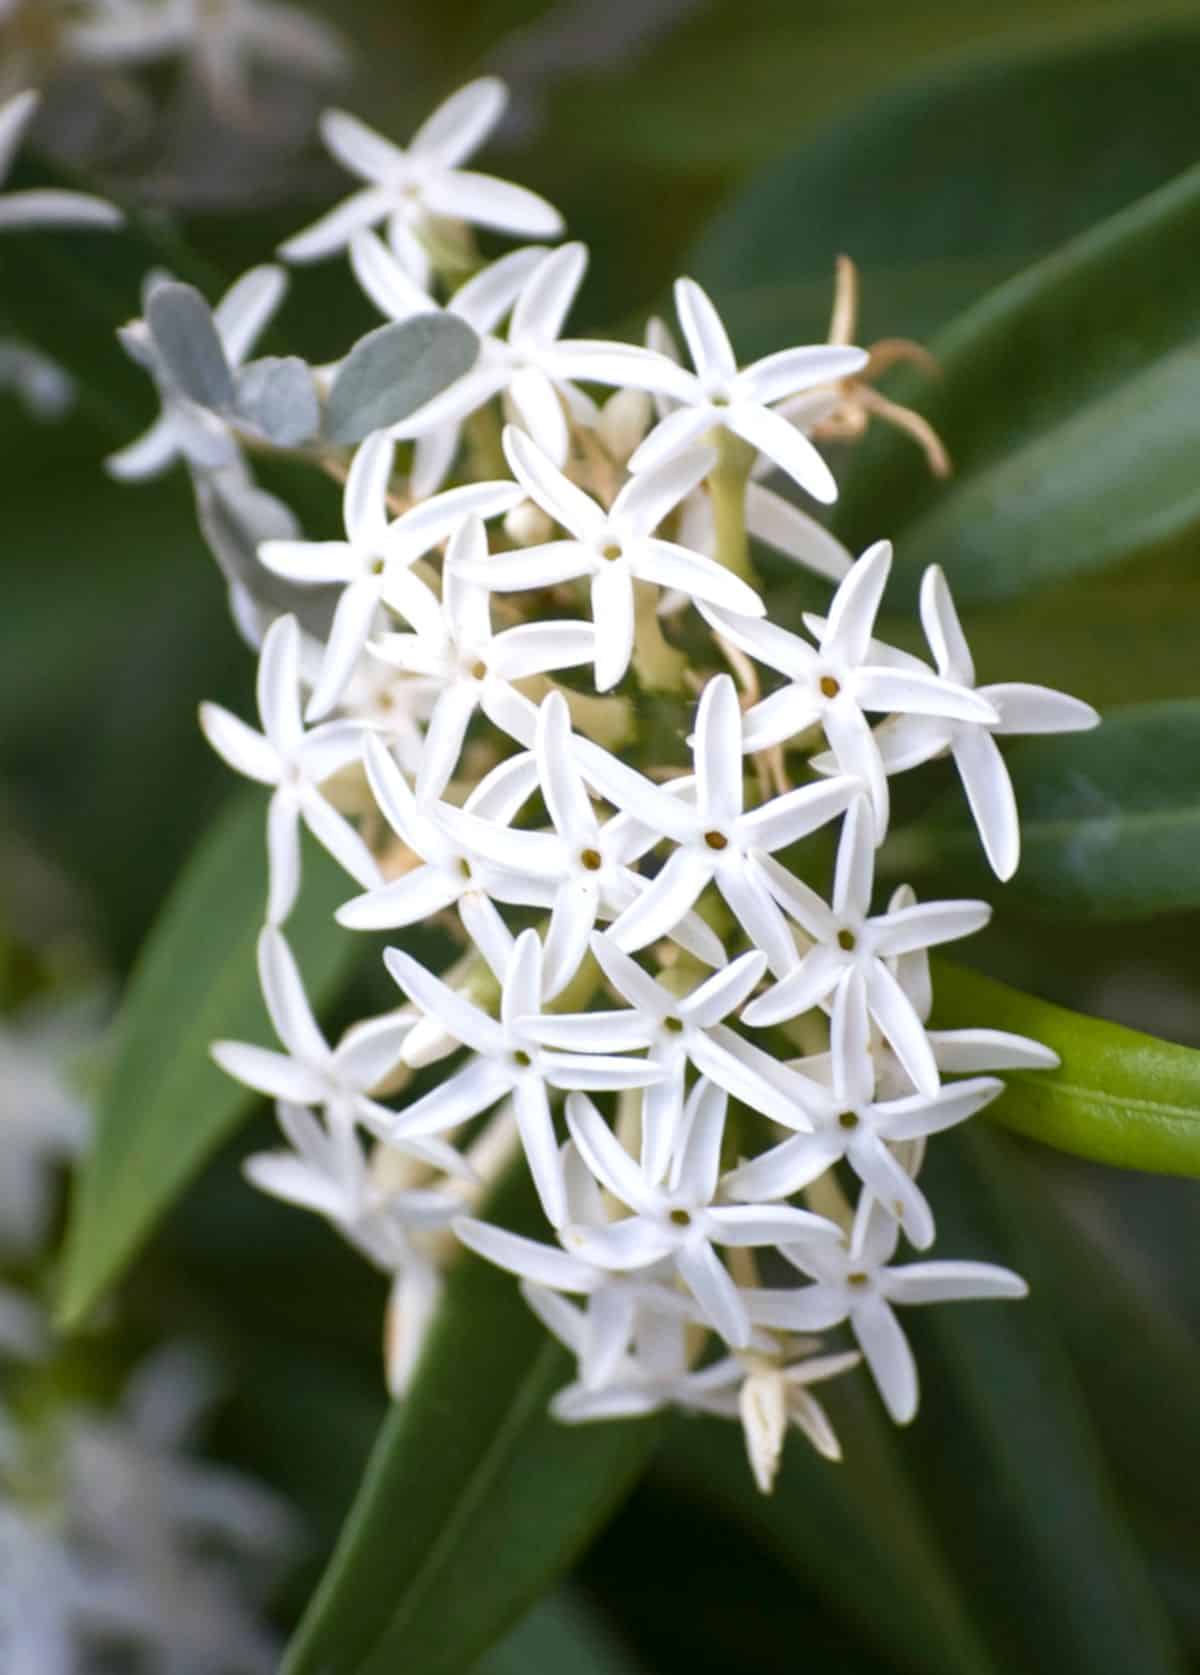 Cluster of white jasmine flowers